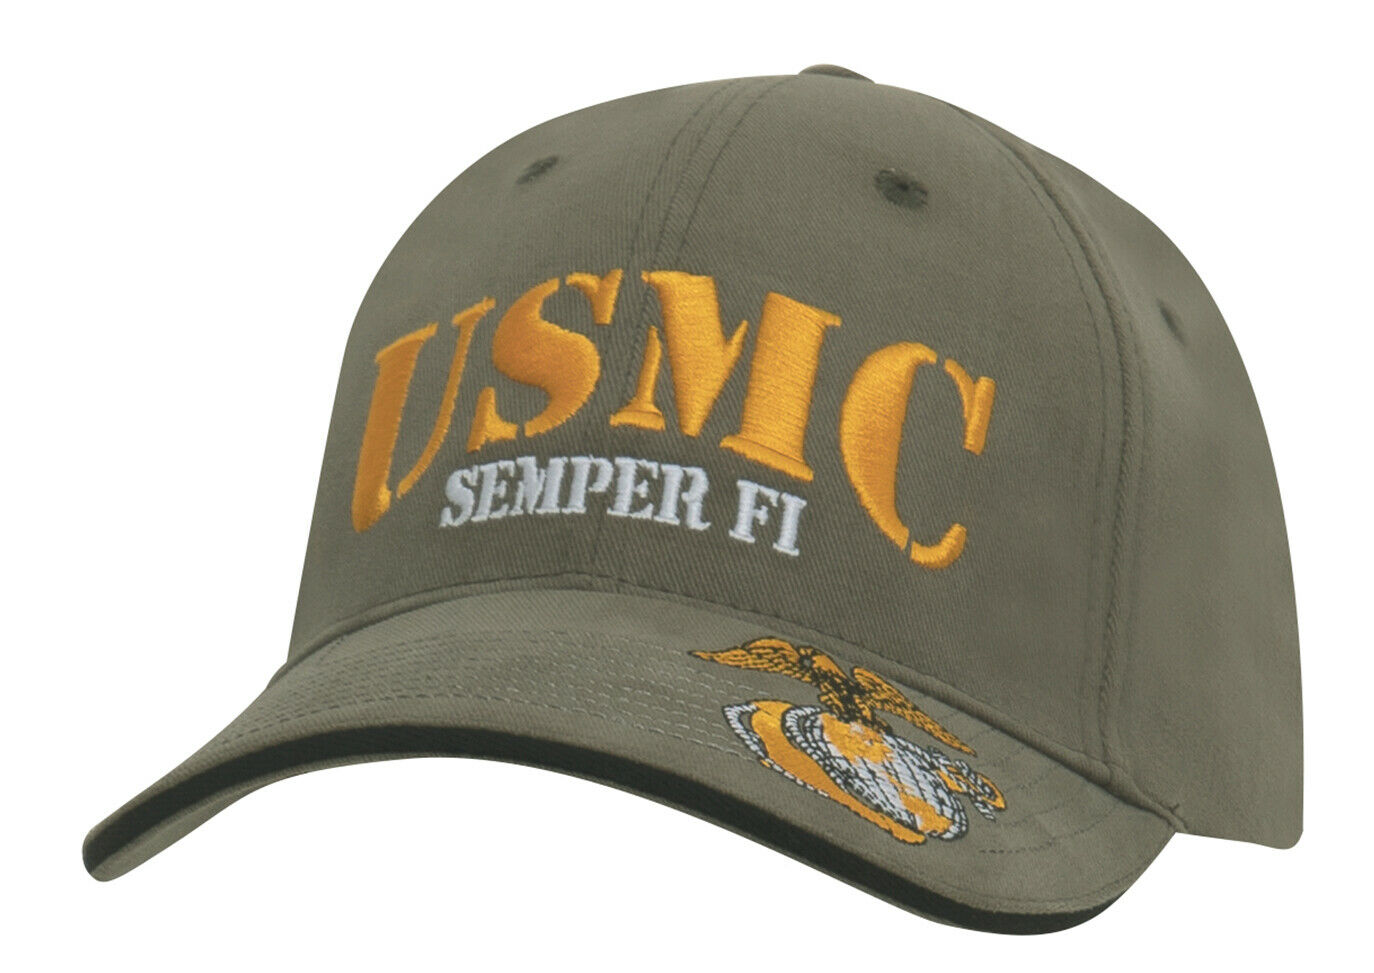 Rothco USMC Marines Semper Fi Low Profile Cap - Olive Drab